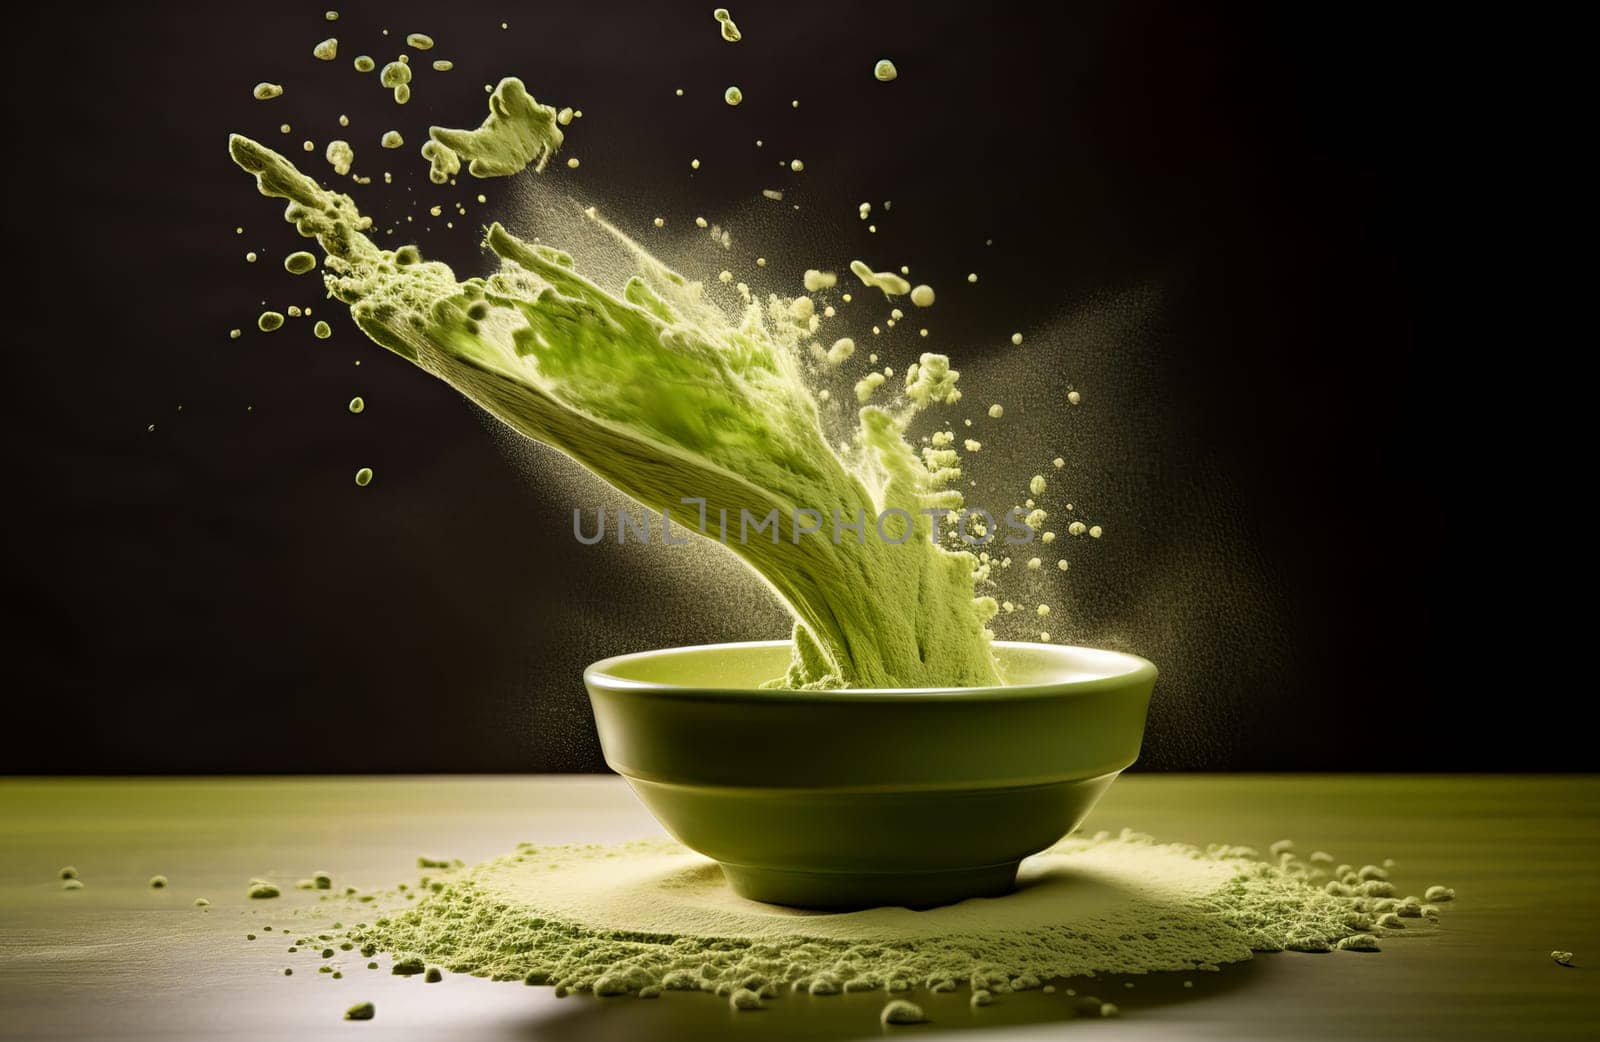 Green smoothie splash in bowl by ylivdesign